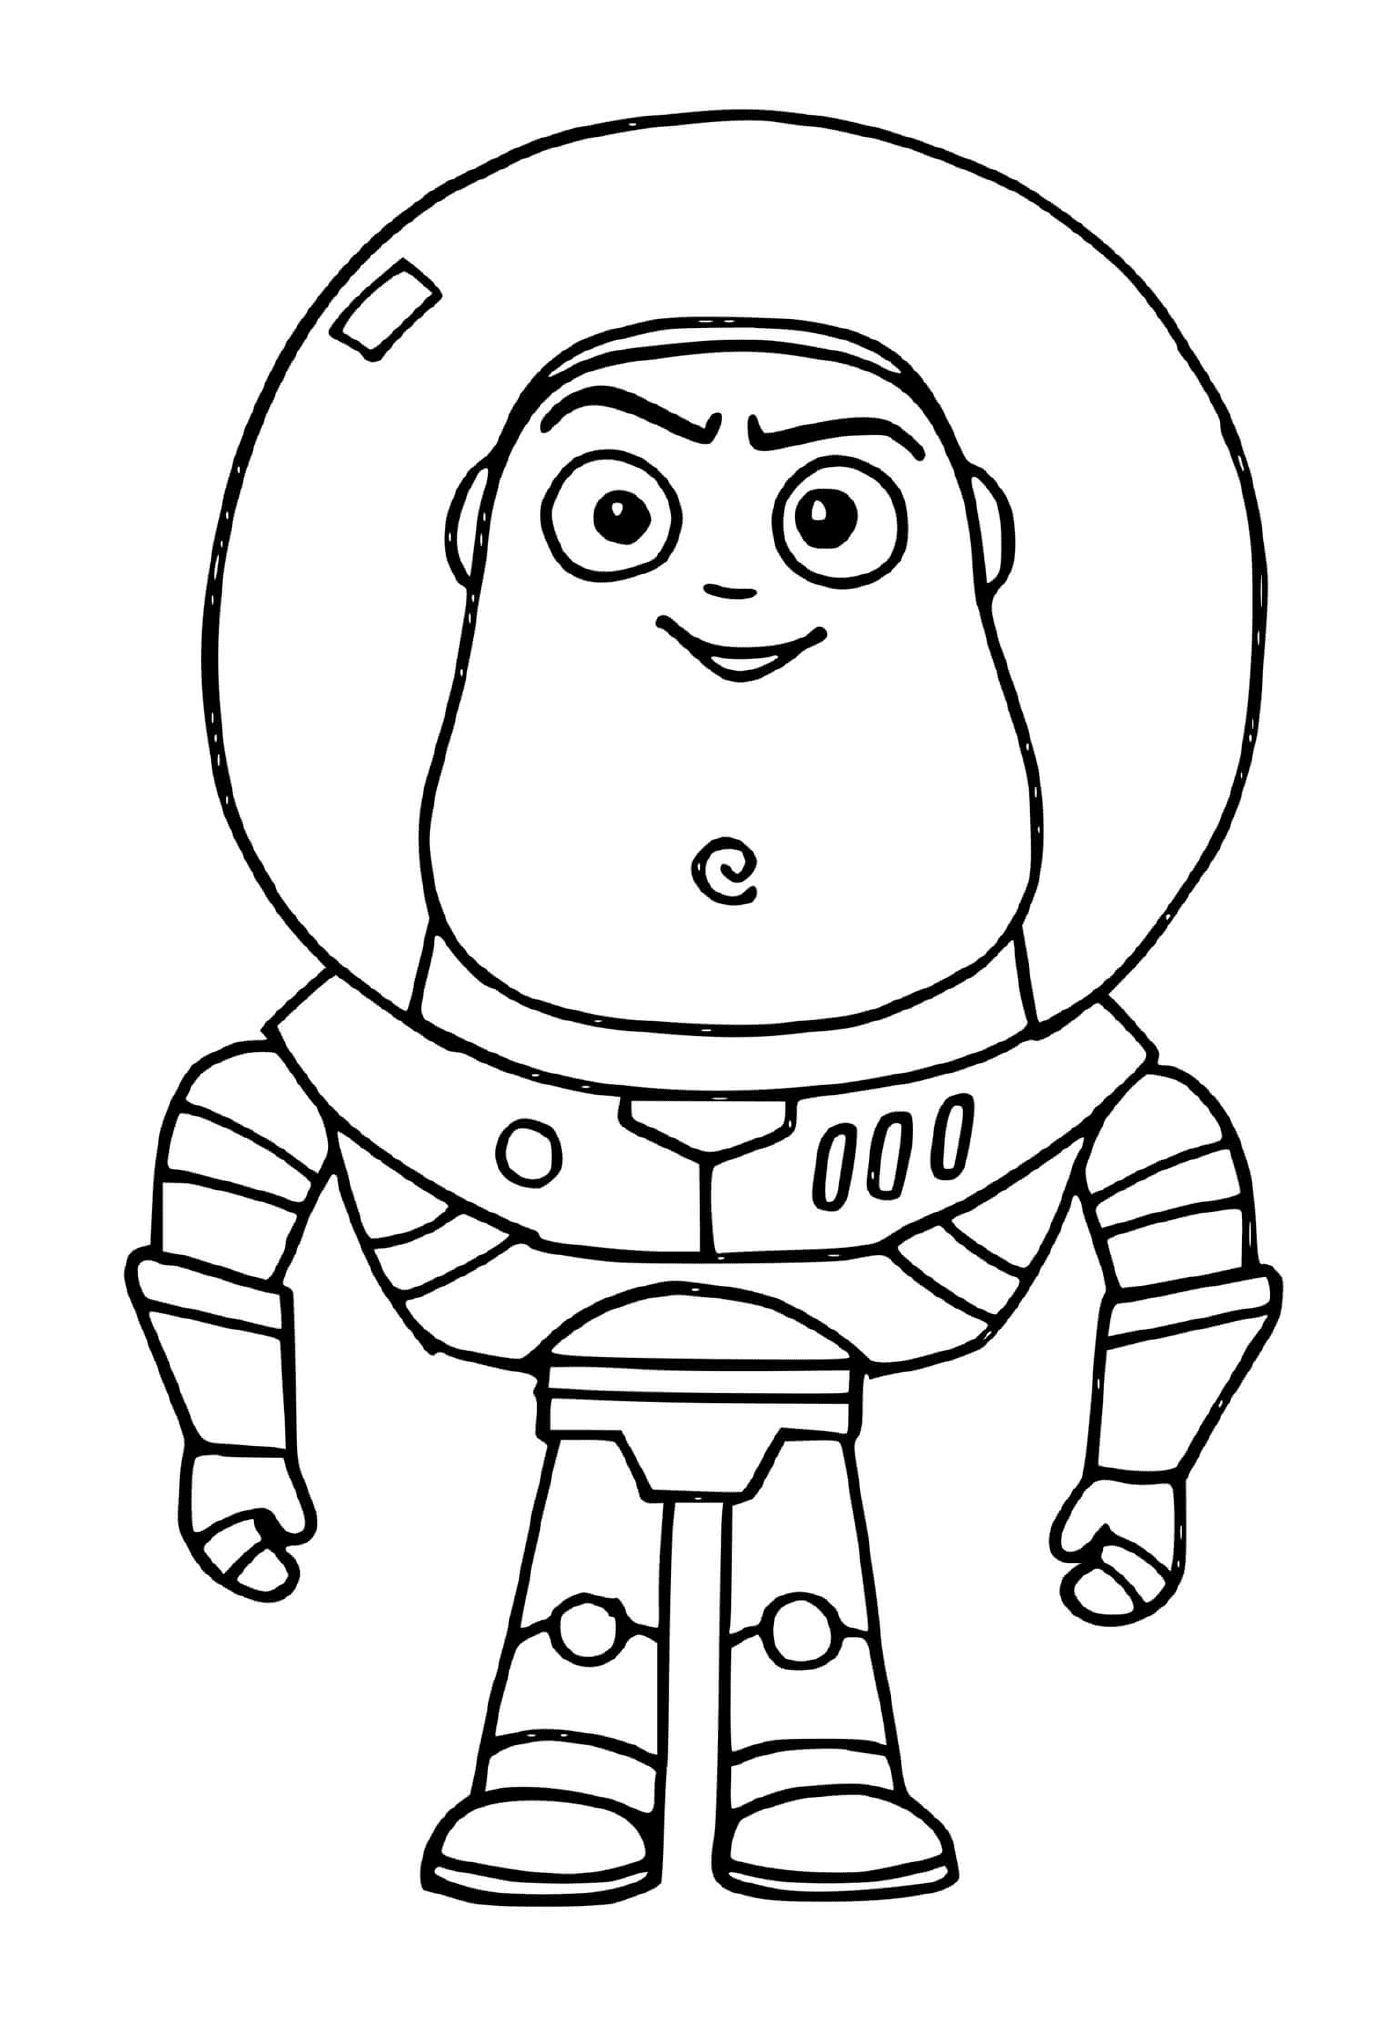  Buzz flash, personaggio del film Toy Story 